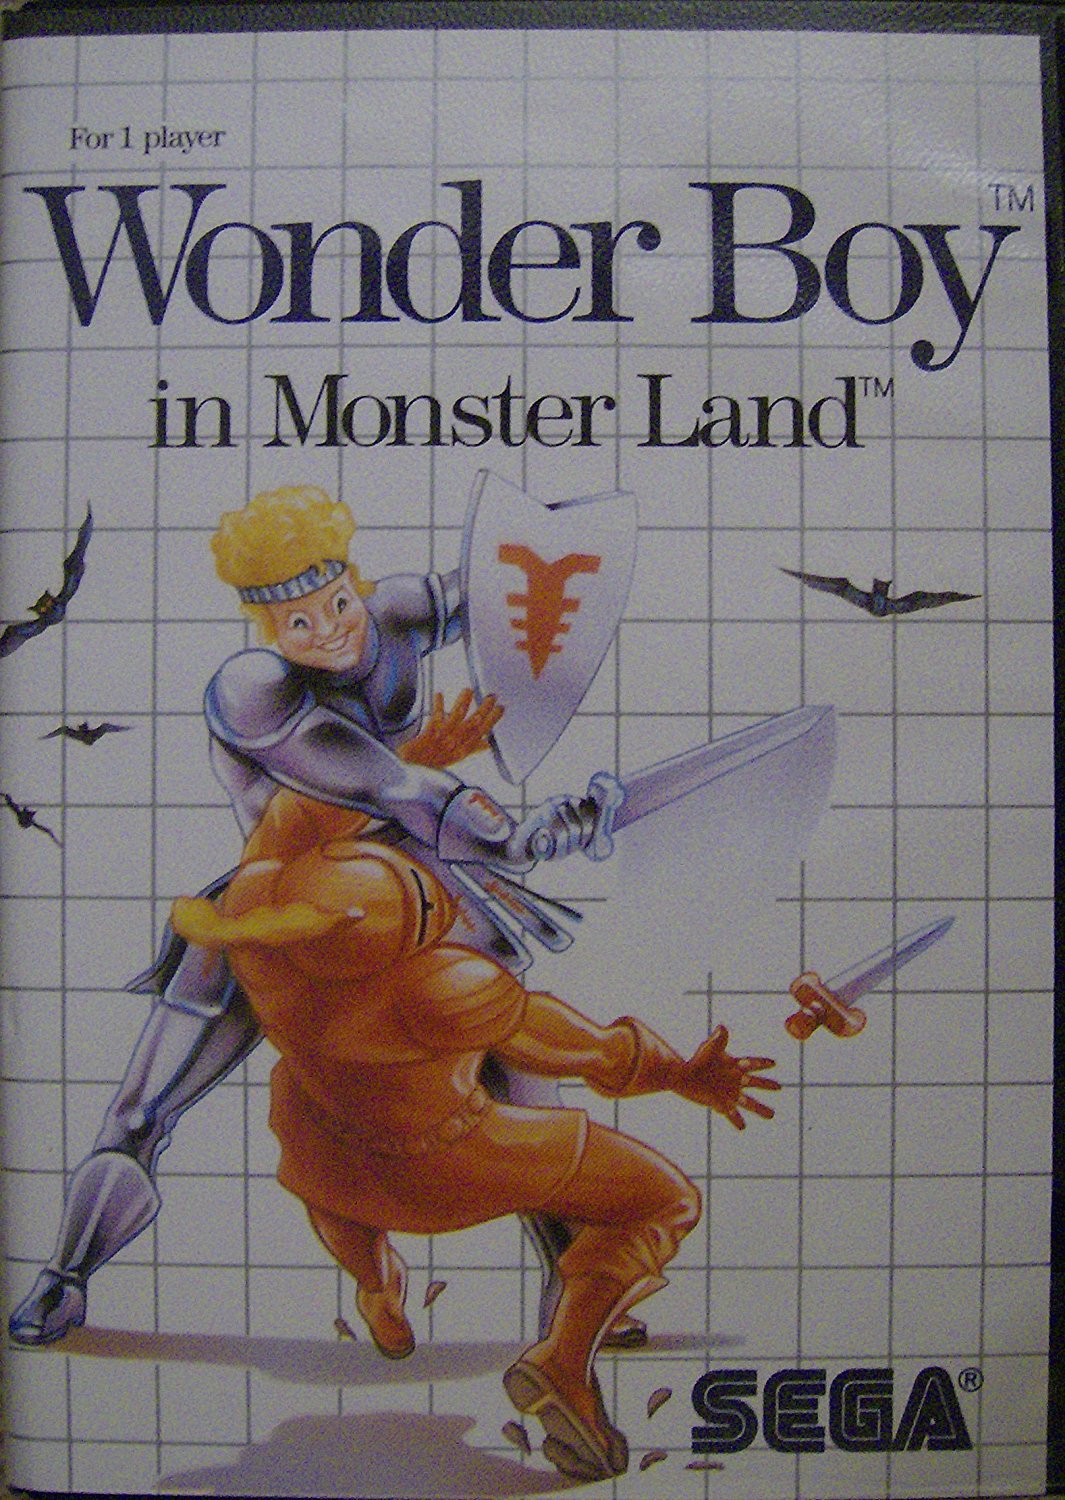 Wonder Boy in Monster Land